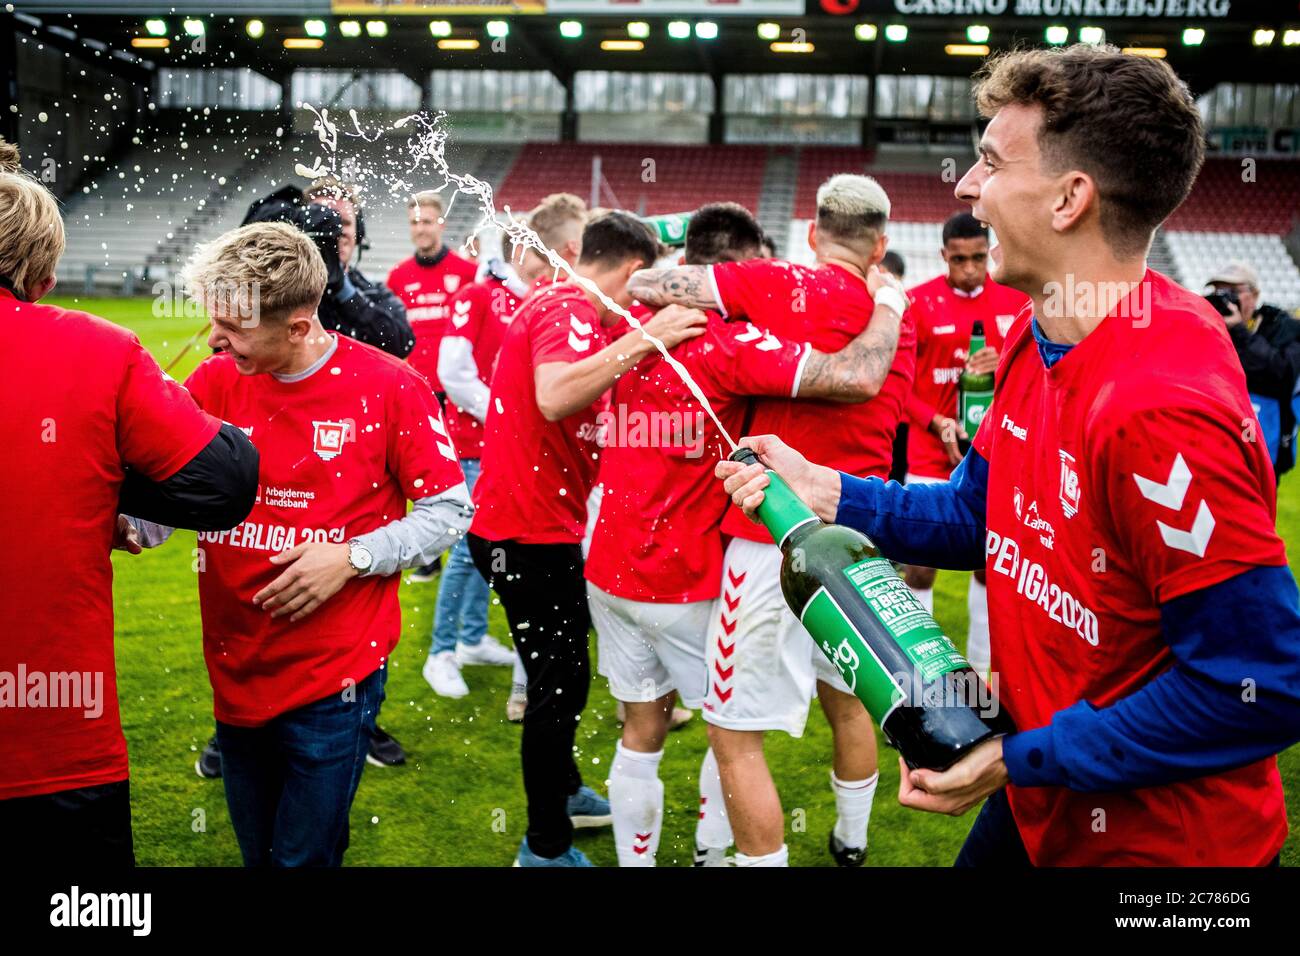 Vejle boldklub nykøbing fc hi-res stock photography and images - Alamy